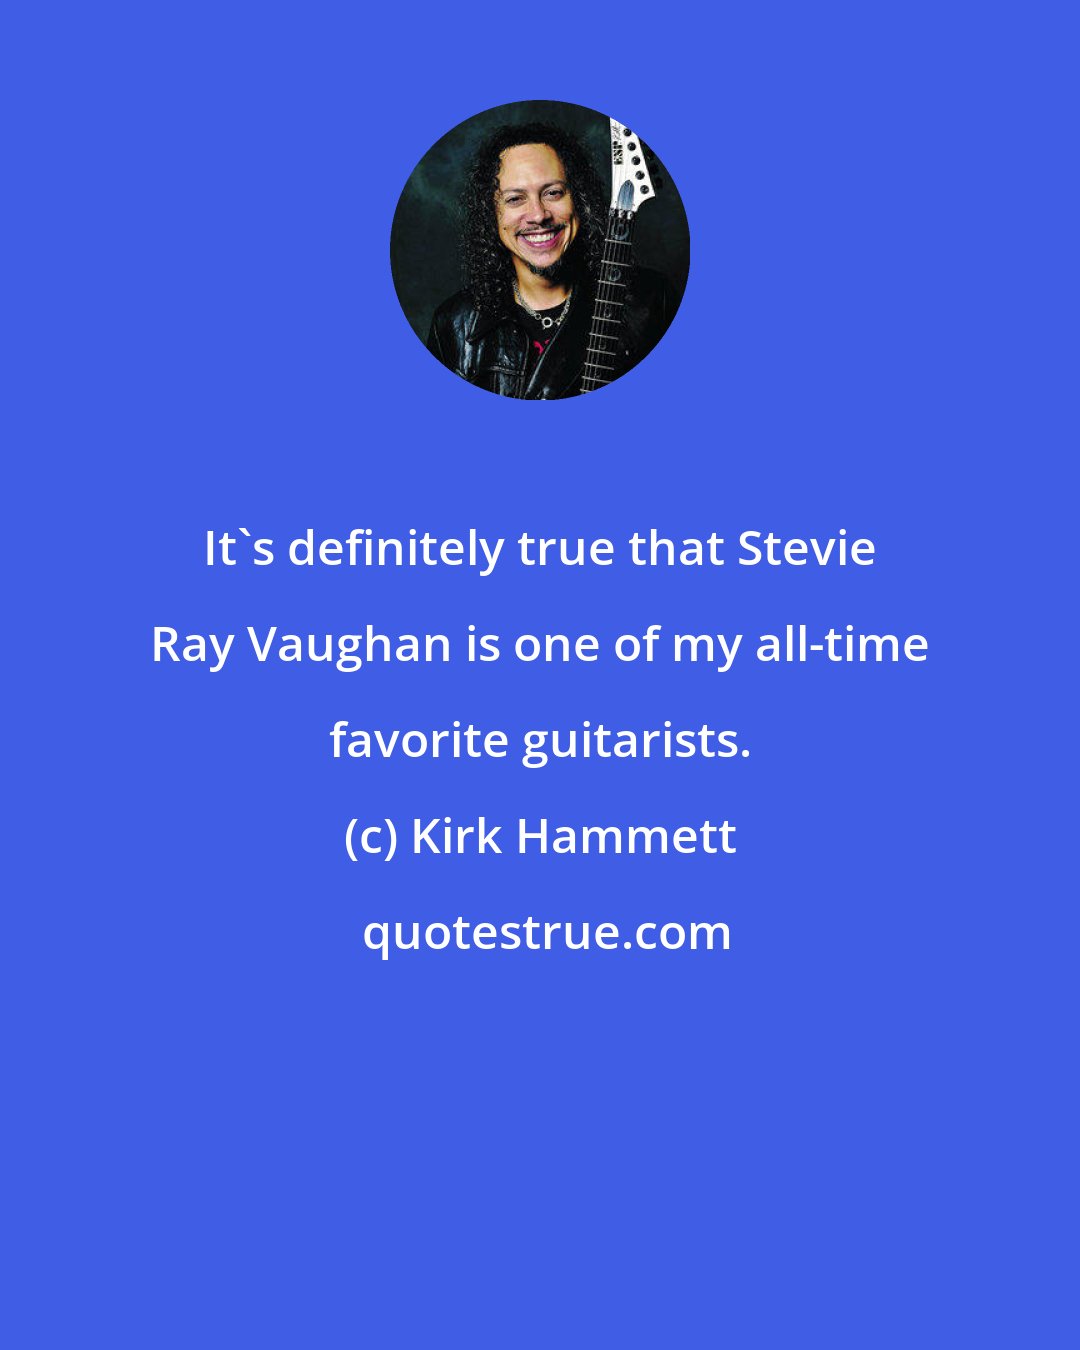 Kirk Hammett: It's definitely true that Stevie Ray Vaughan is one of my all-time favorite guitarists.